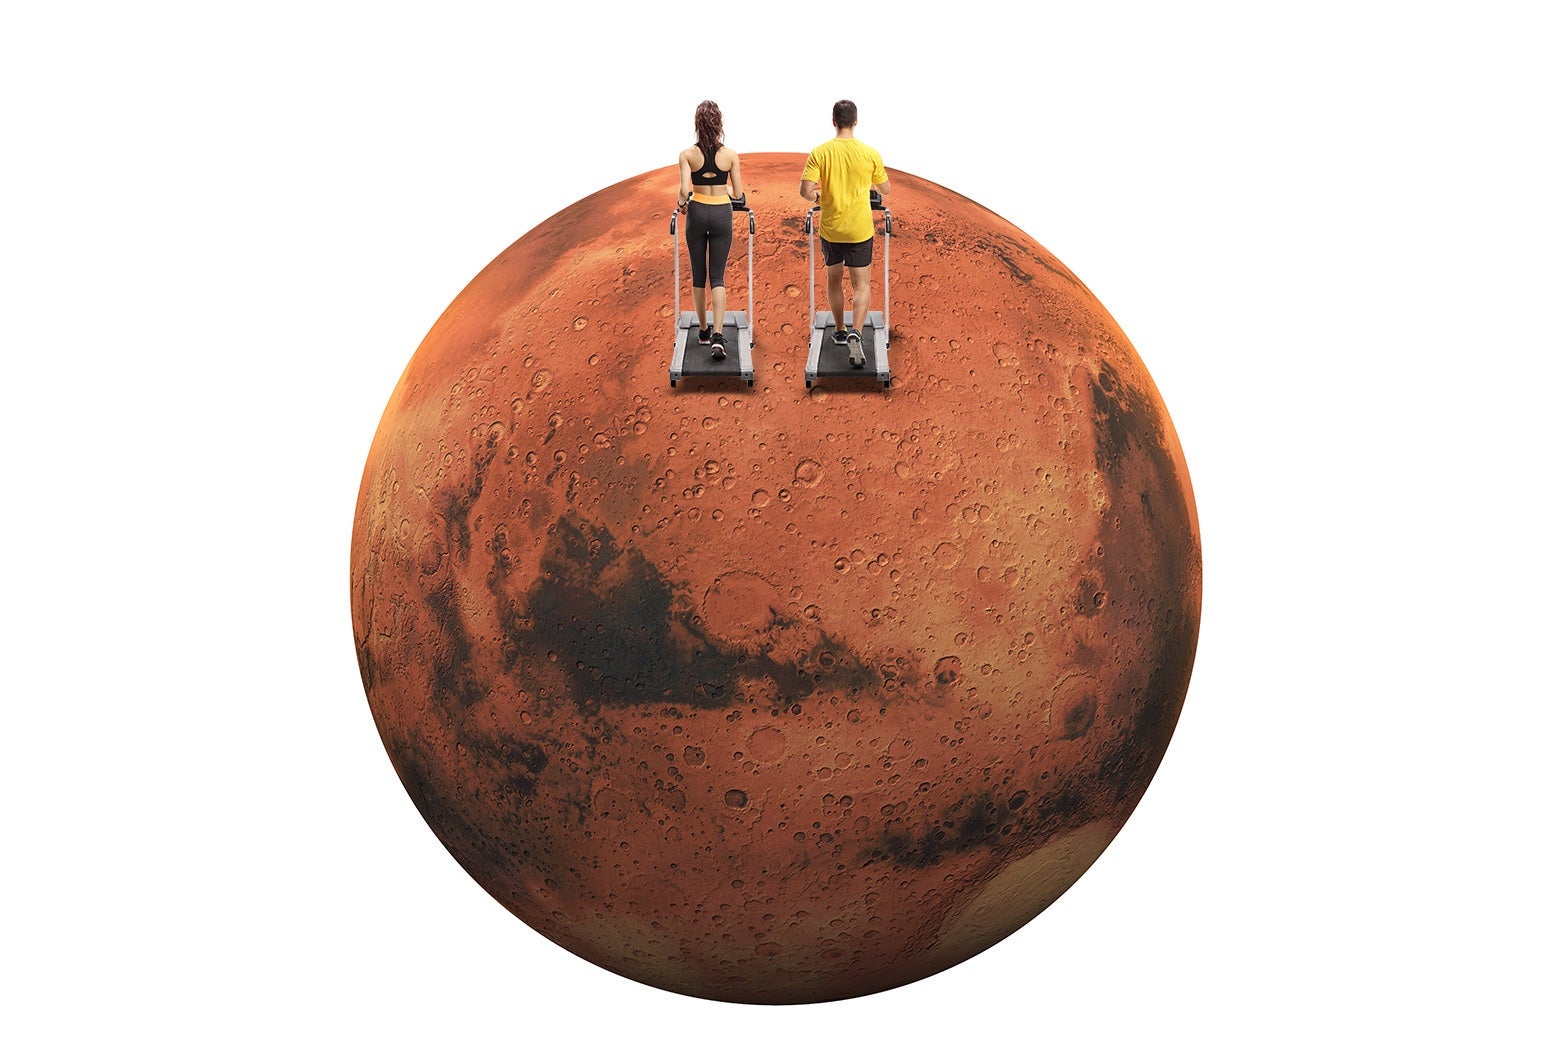 Photo illustrations of two people jogging on treadmills on Mars